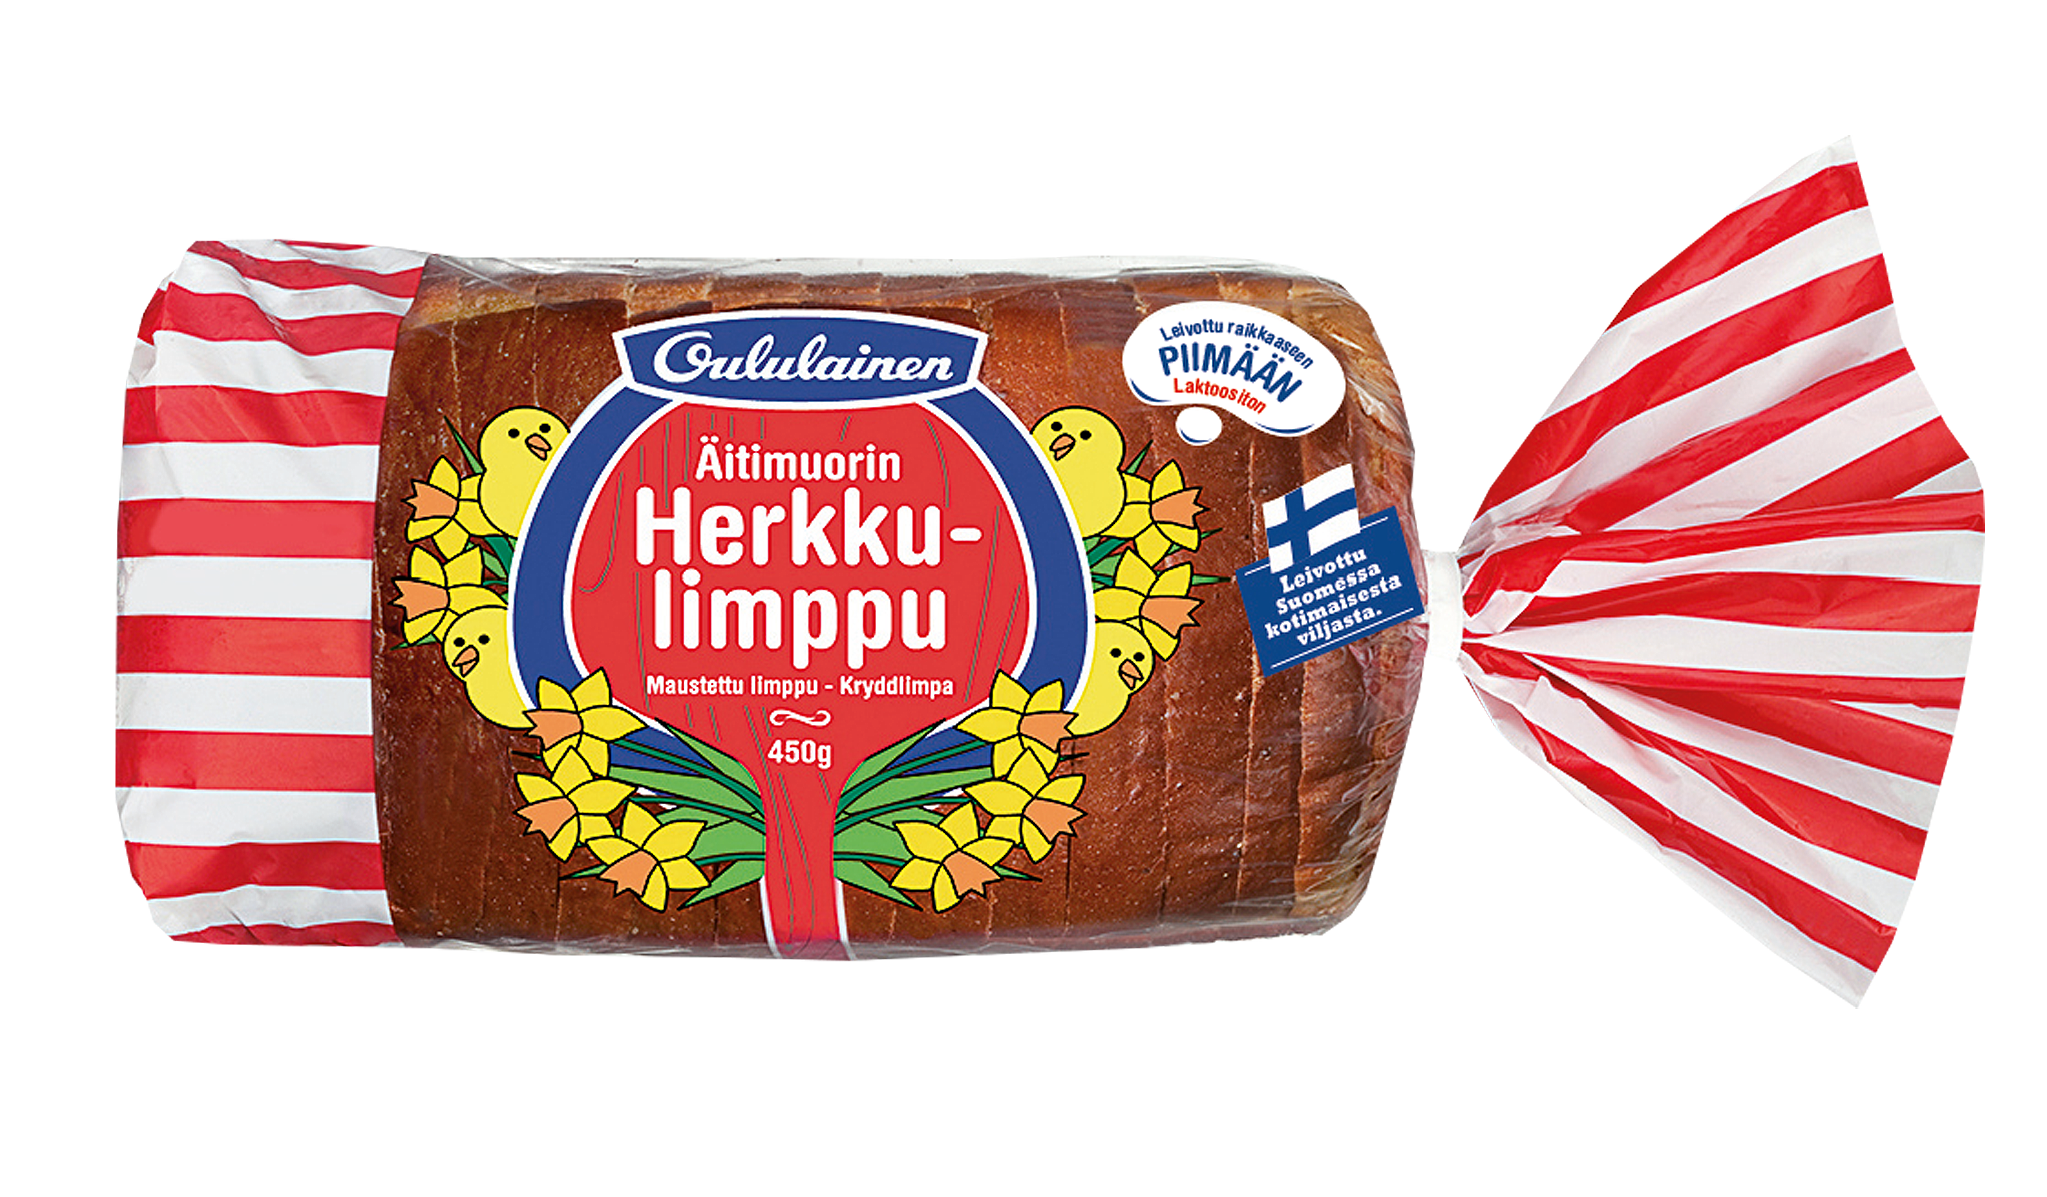 Oululainen Äitimuorin Herkkulimppu 450g, flavoured loaf